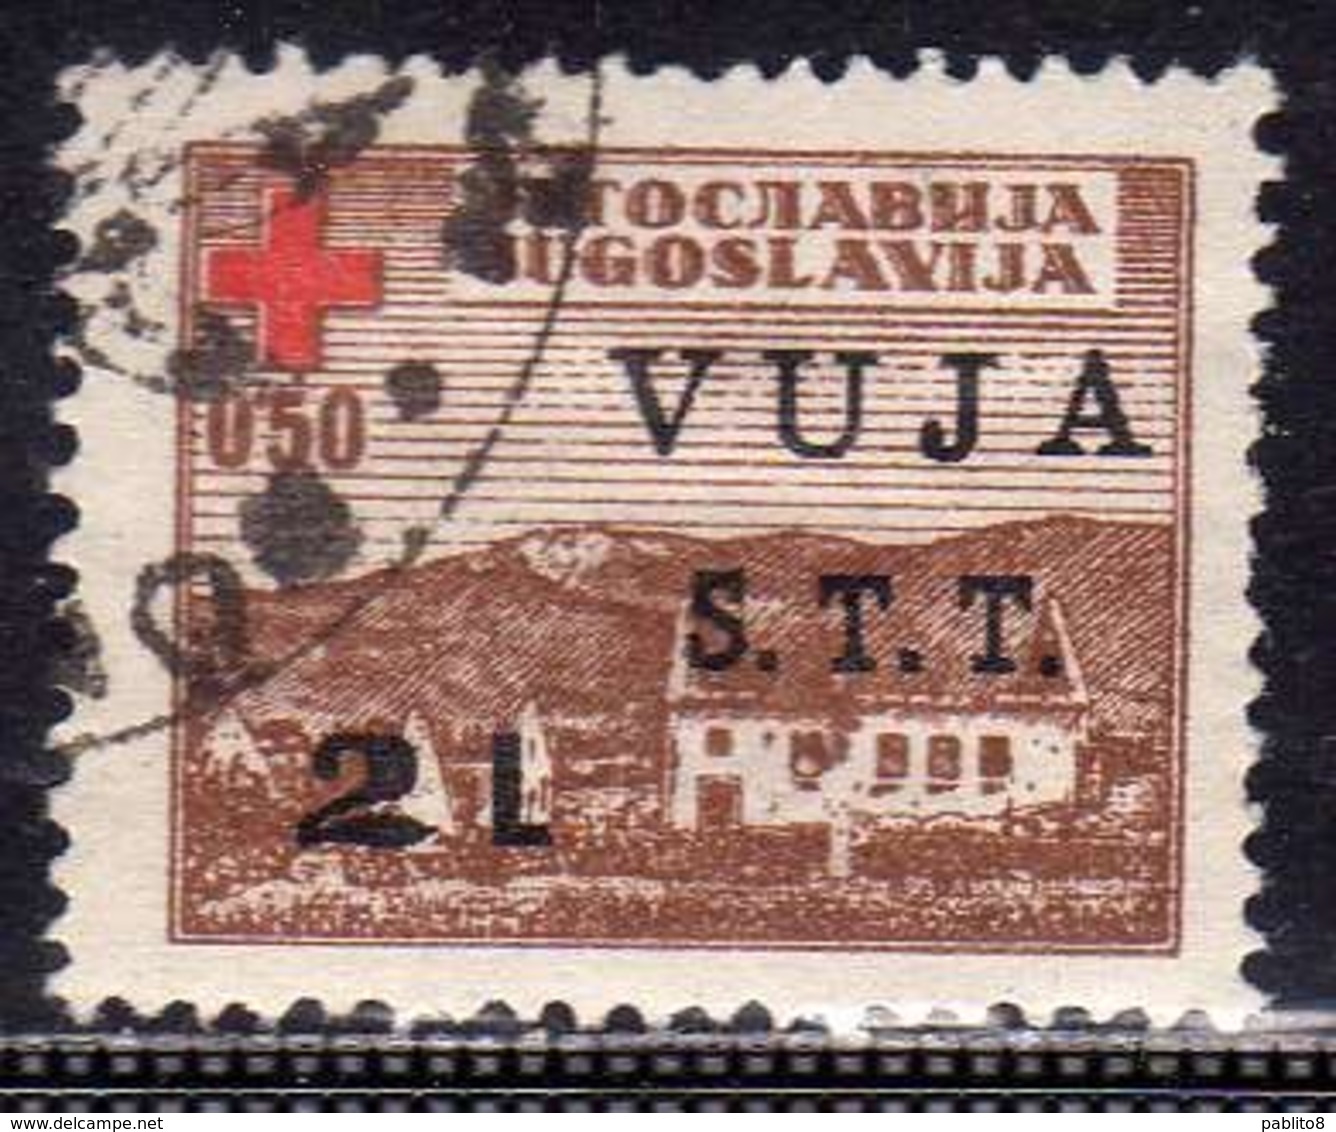 TRIESTE B 1948 SOPRASTAMPATO DI JUGOSLAVIA YUGOSLAVIA OVERPRINTED CROCE ROSSA RED CROSS 2 LIRE SU 0.50 D USATO USED - Usados